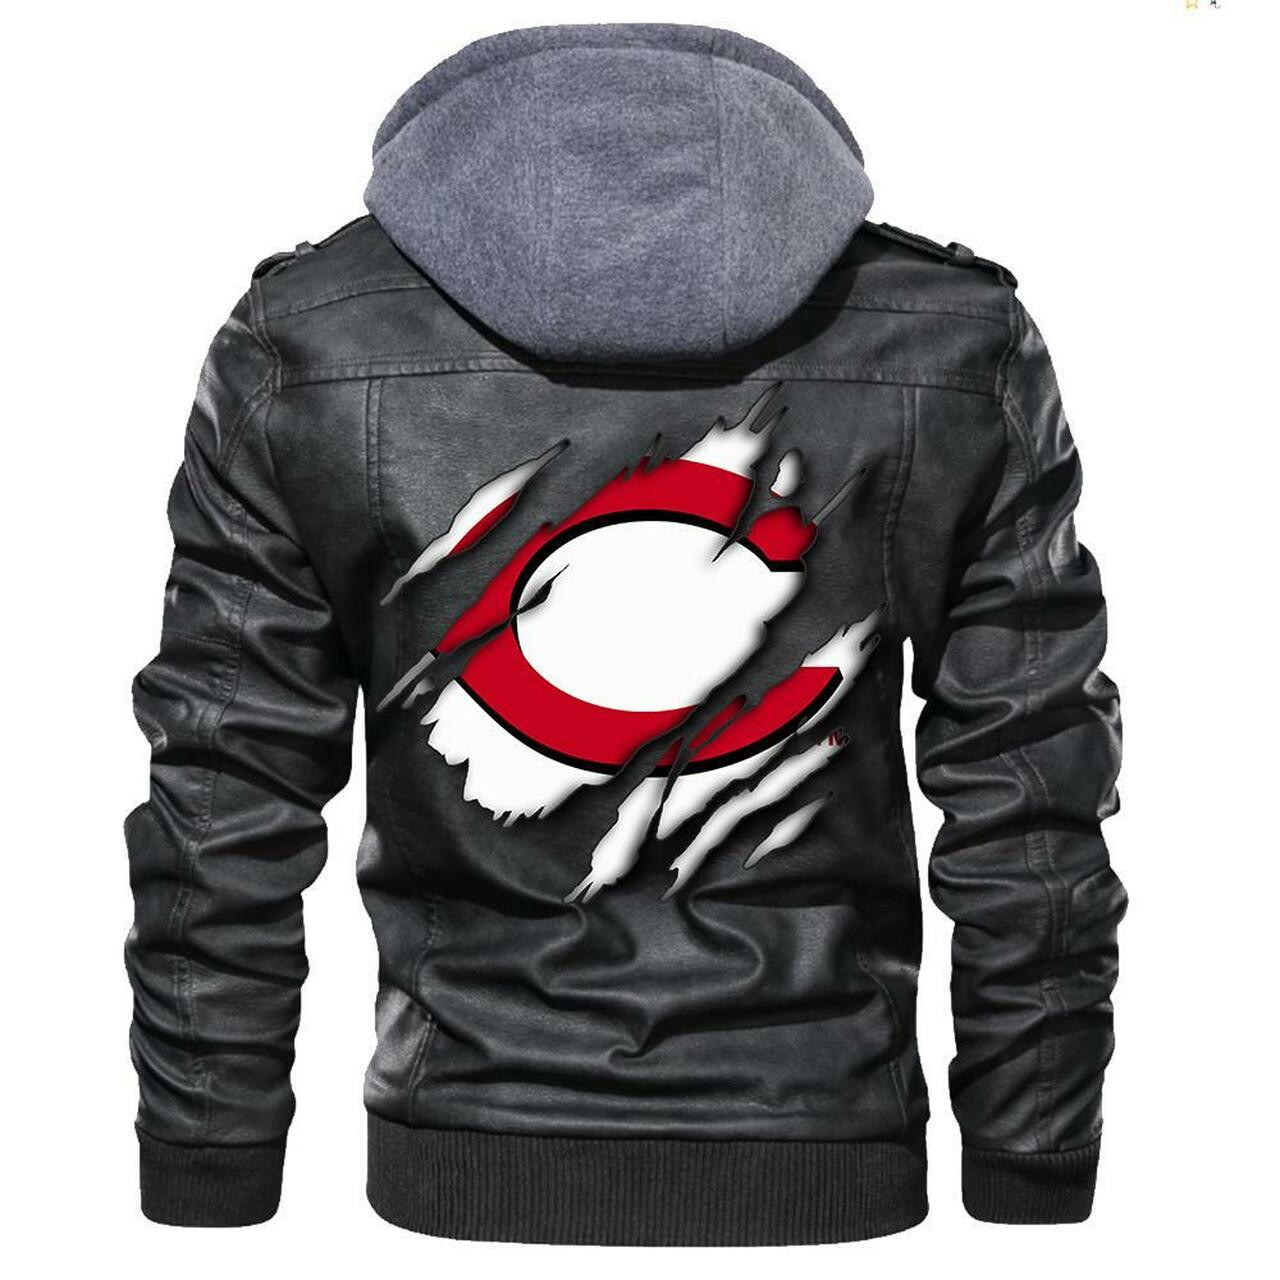 Top leather jacket Sells Best on Techcomshop 152